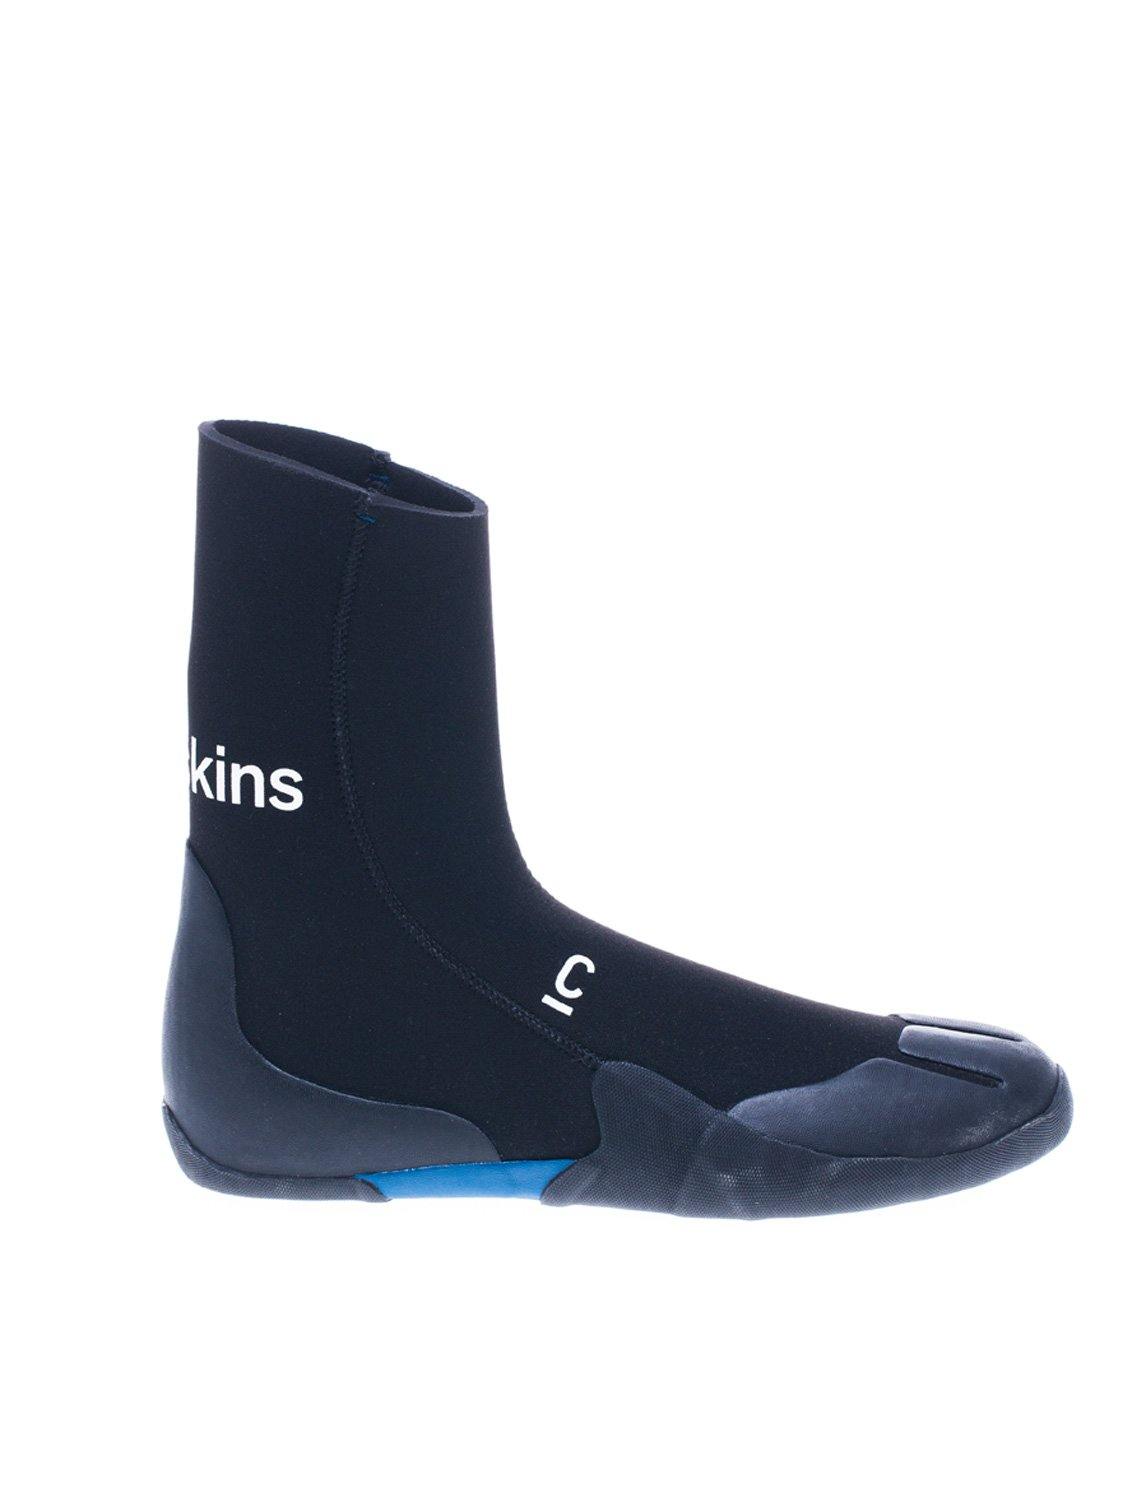 C-Skins Legend 5mm Adult Round Toe Boots - Black/Ocean Blue - Stokedstore